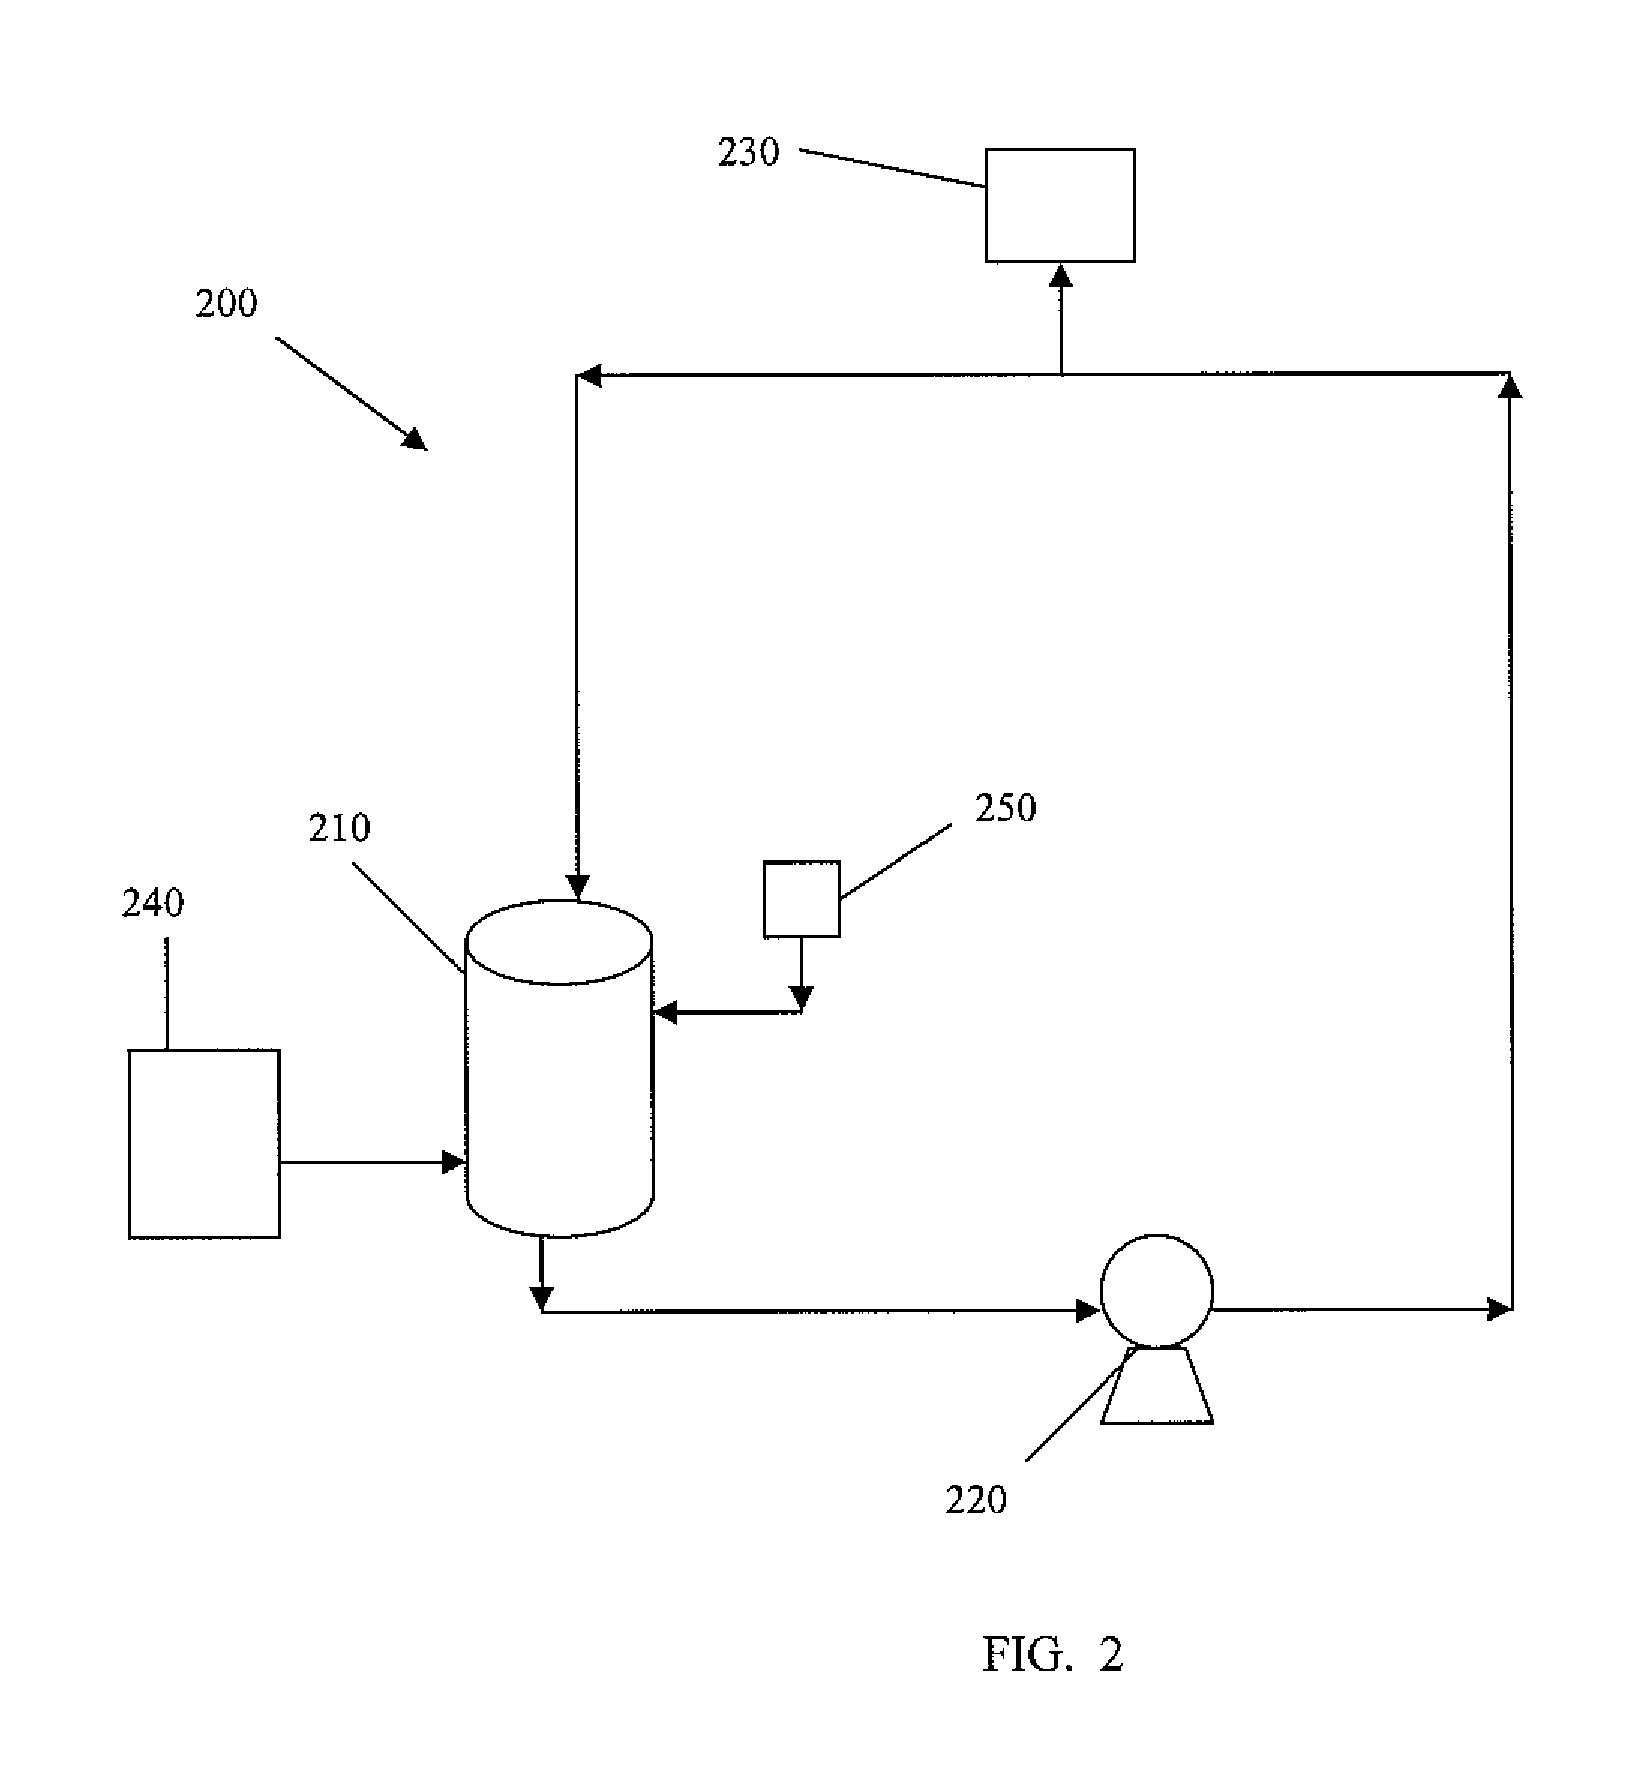 Method and Apparatus for Dispensing Liquid with Precise Control